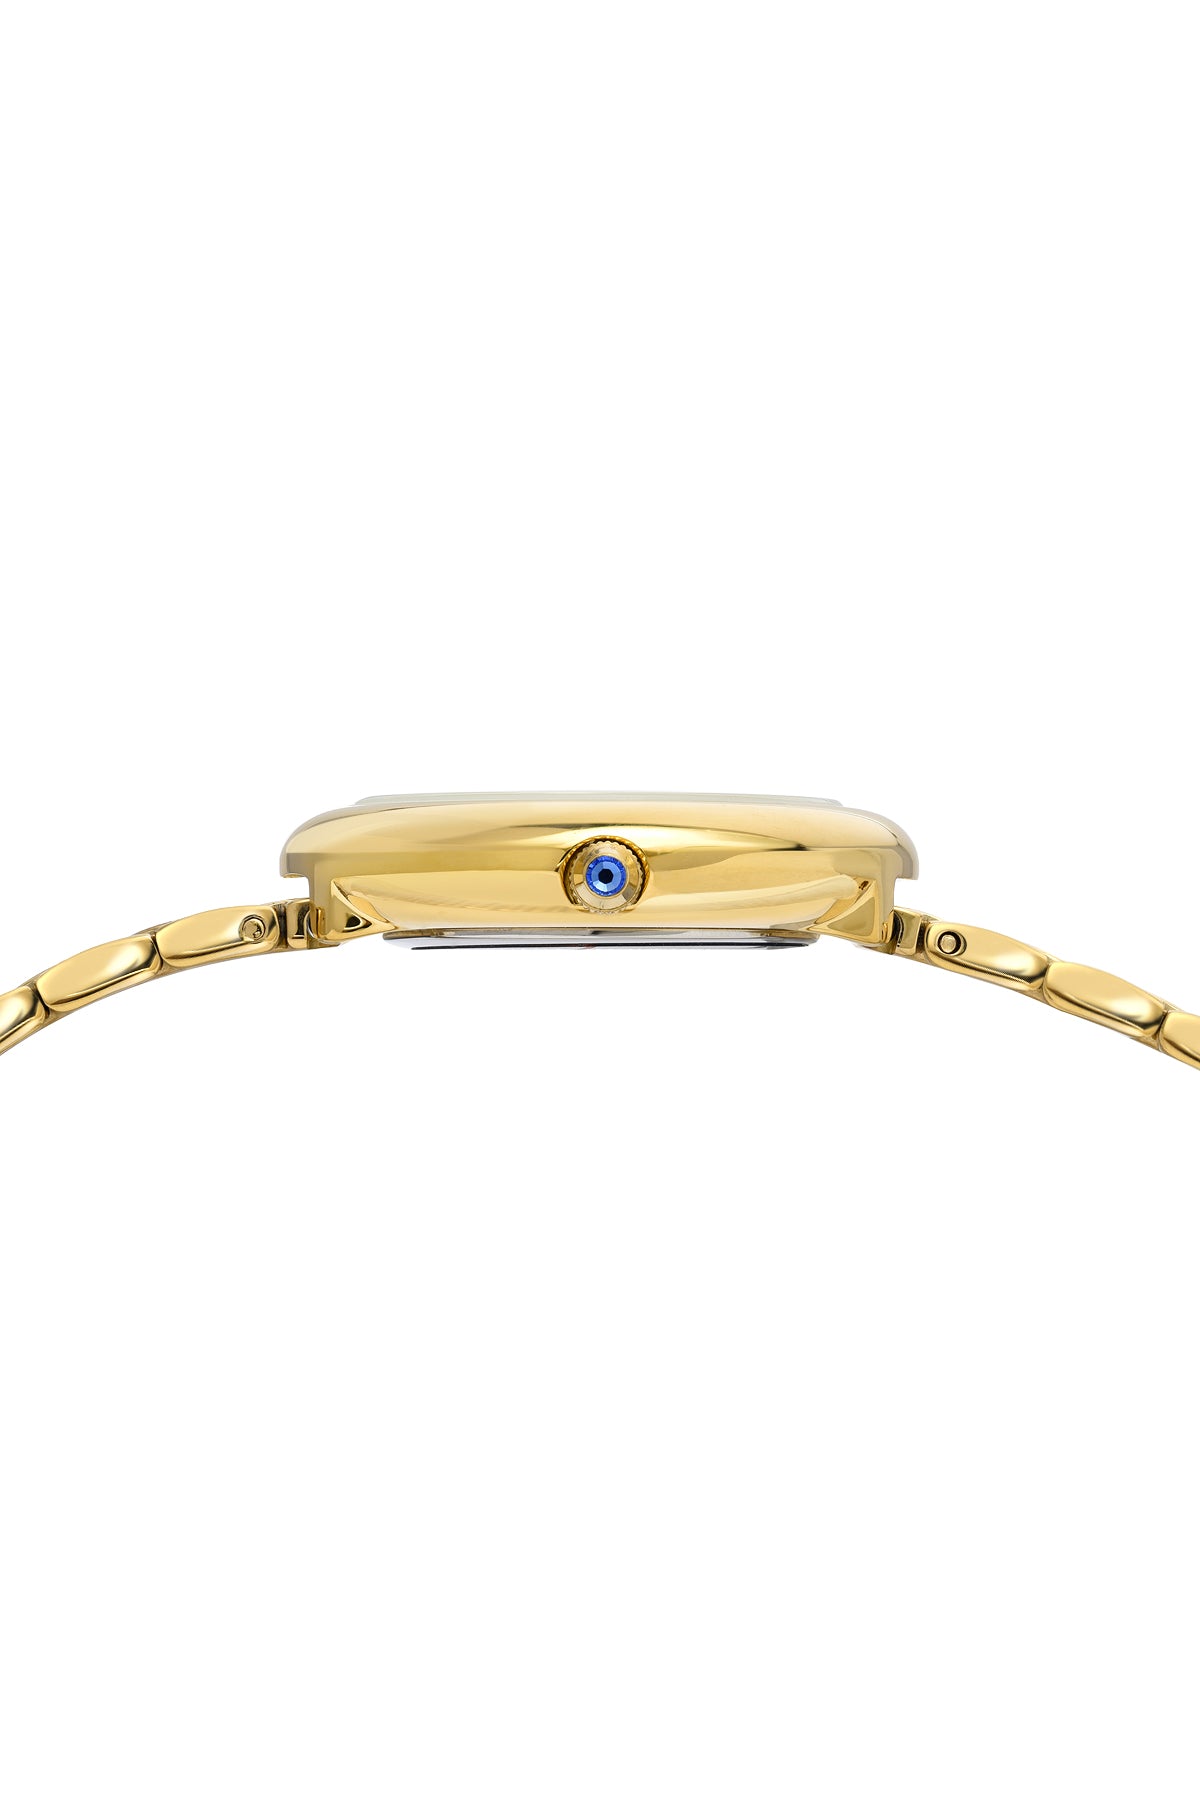 Porsamo Bleu Florentina Luxury Diamond Women's Stainless Steel Watch, White, Gold 901BFLS